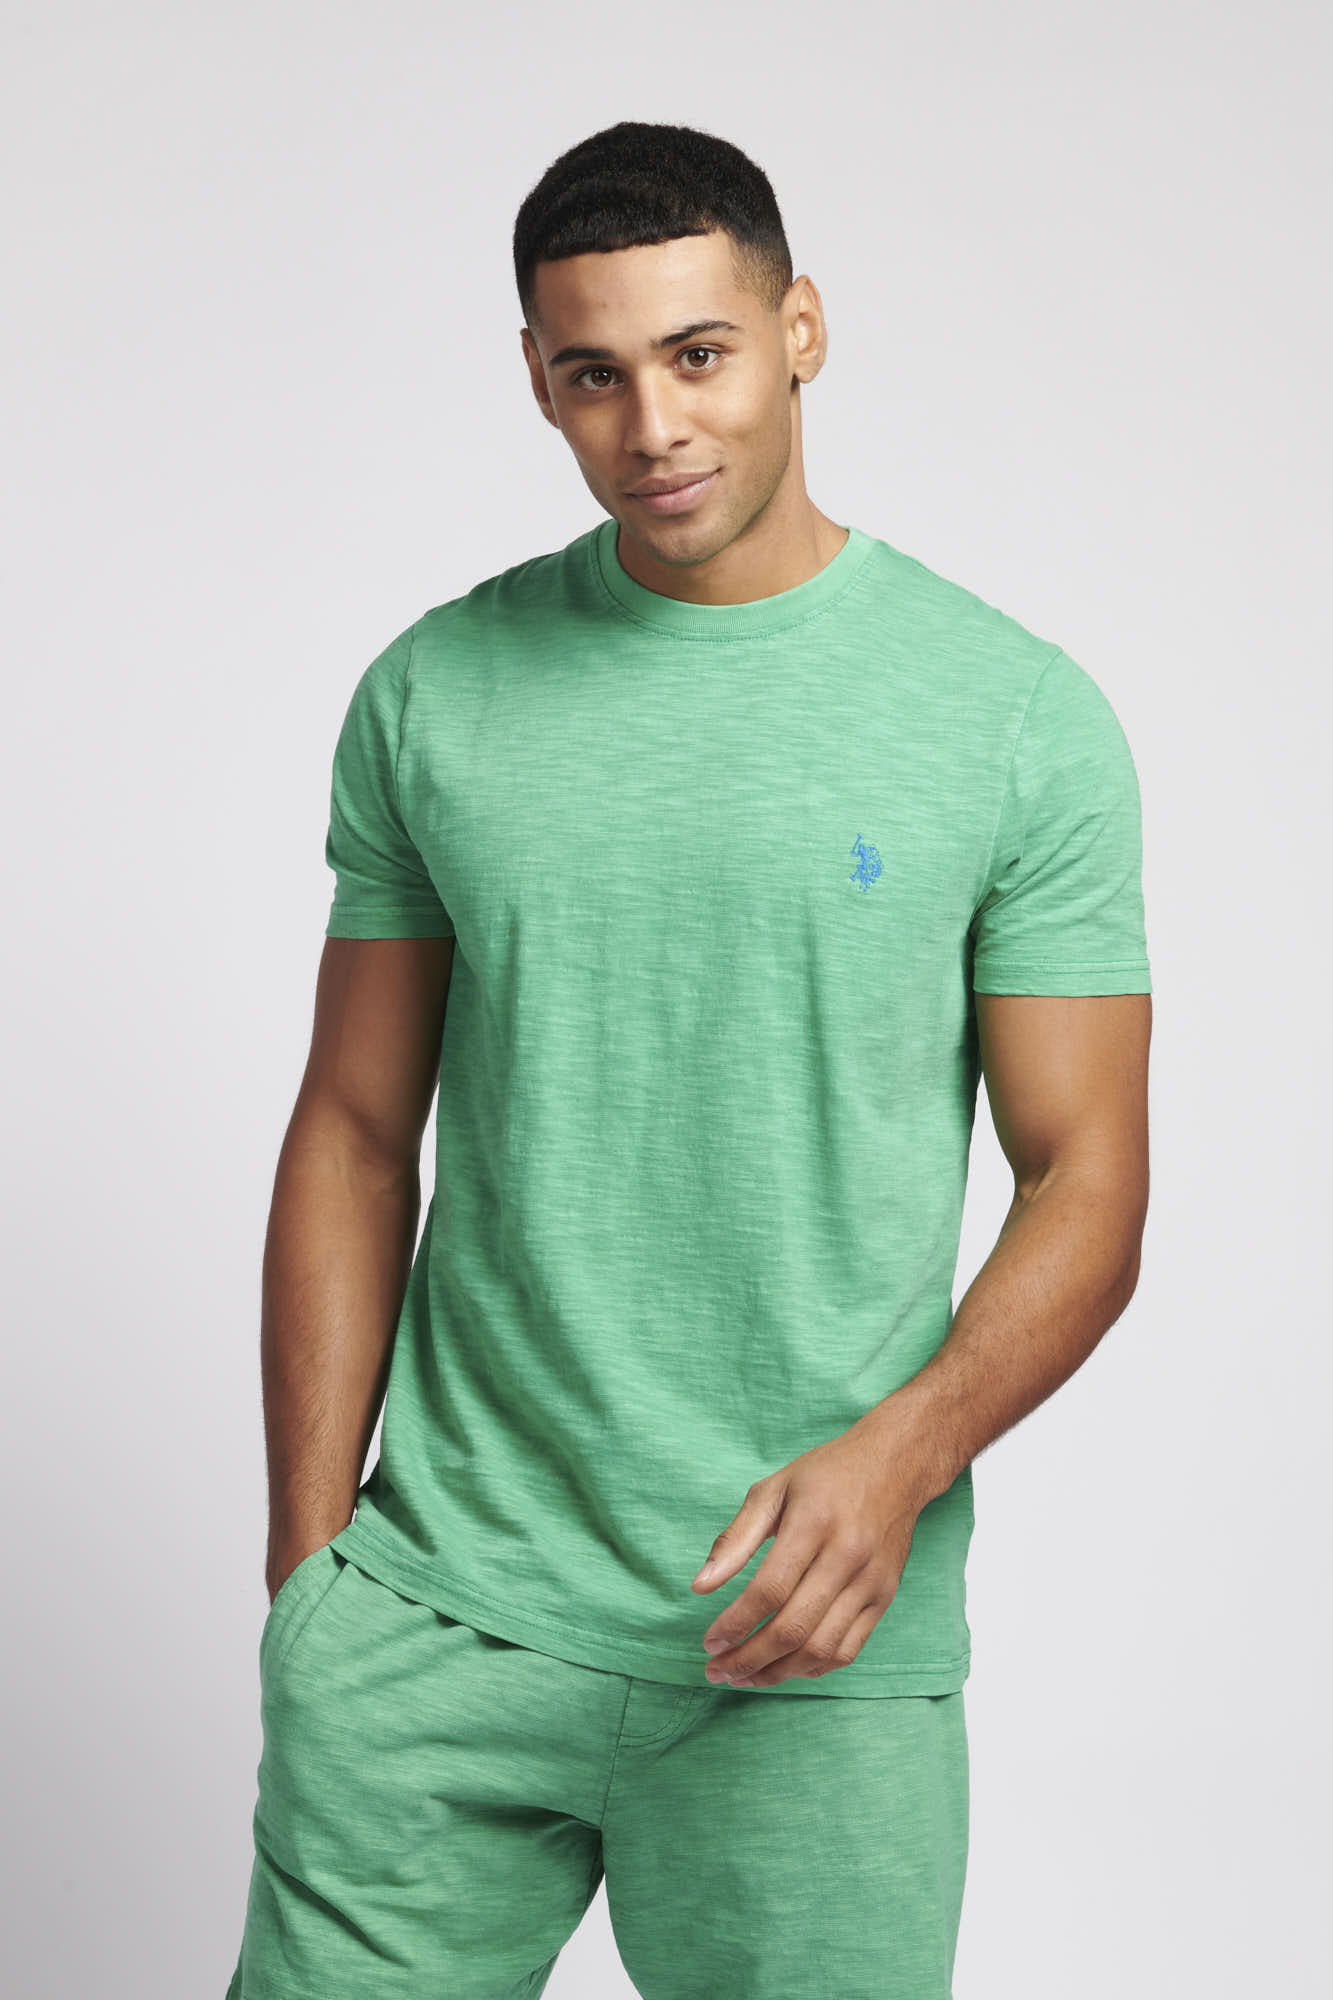 Mens Garment Dye Slub Cotton T-Shirt in Golf Green